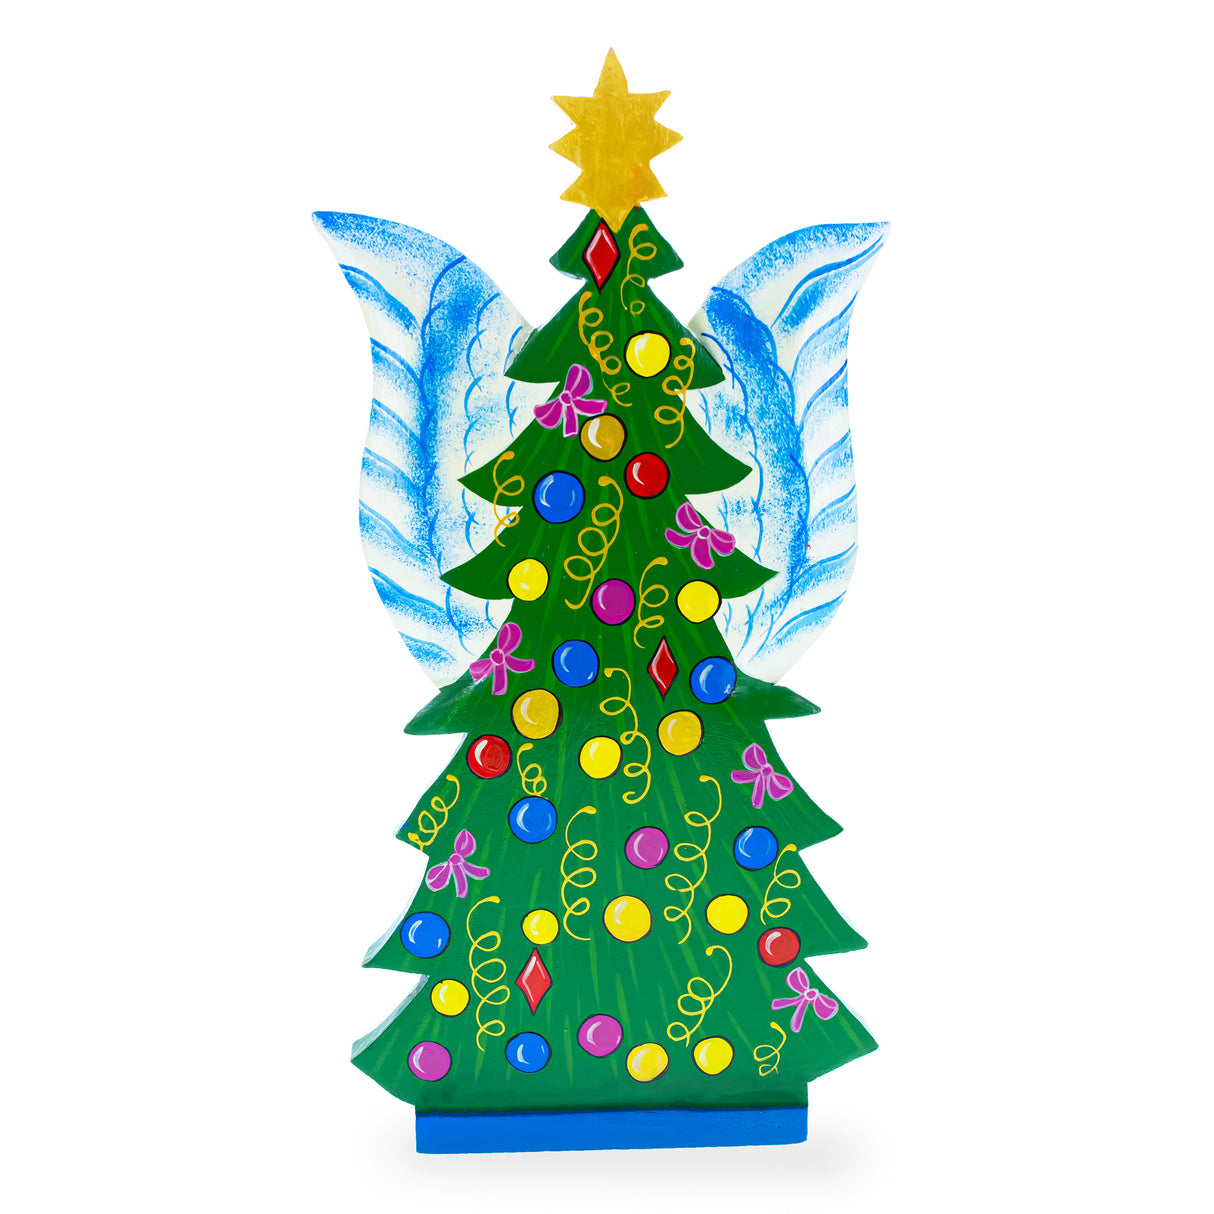 BestPysanky online gift shop sells Angel Christmas tree figurine figure decoration decorative